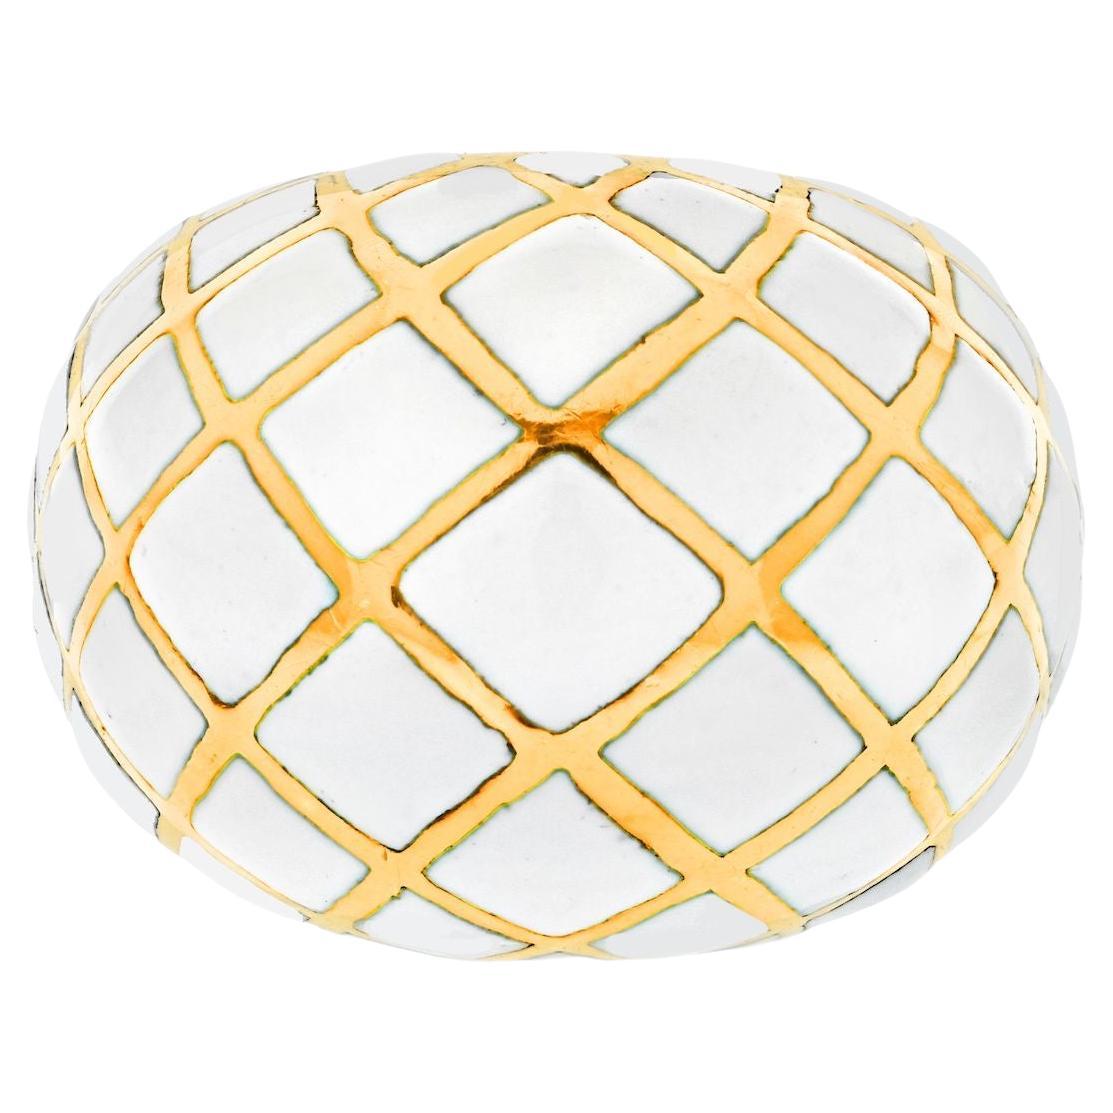 David Webb Platinum & 18k Gold White Enamel Checkerboard Pattern Bombe Ring